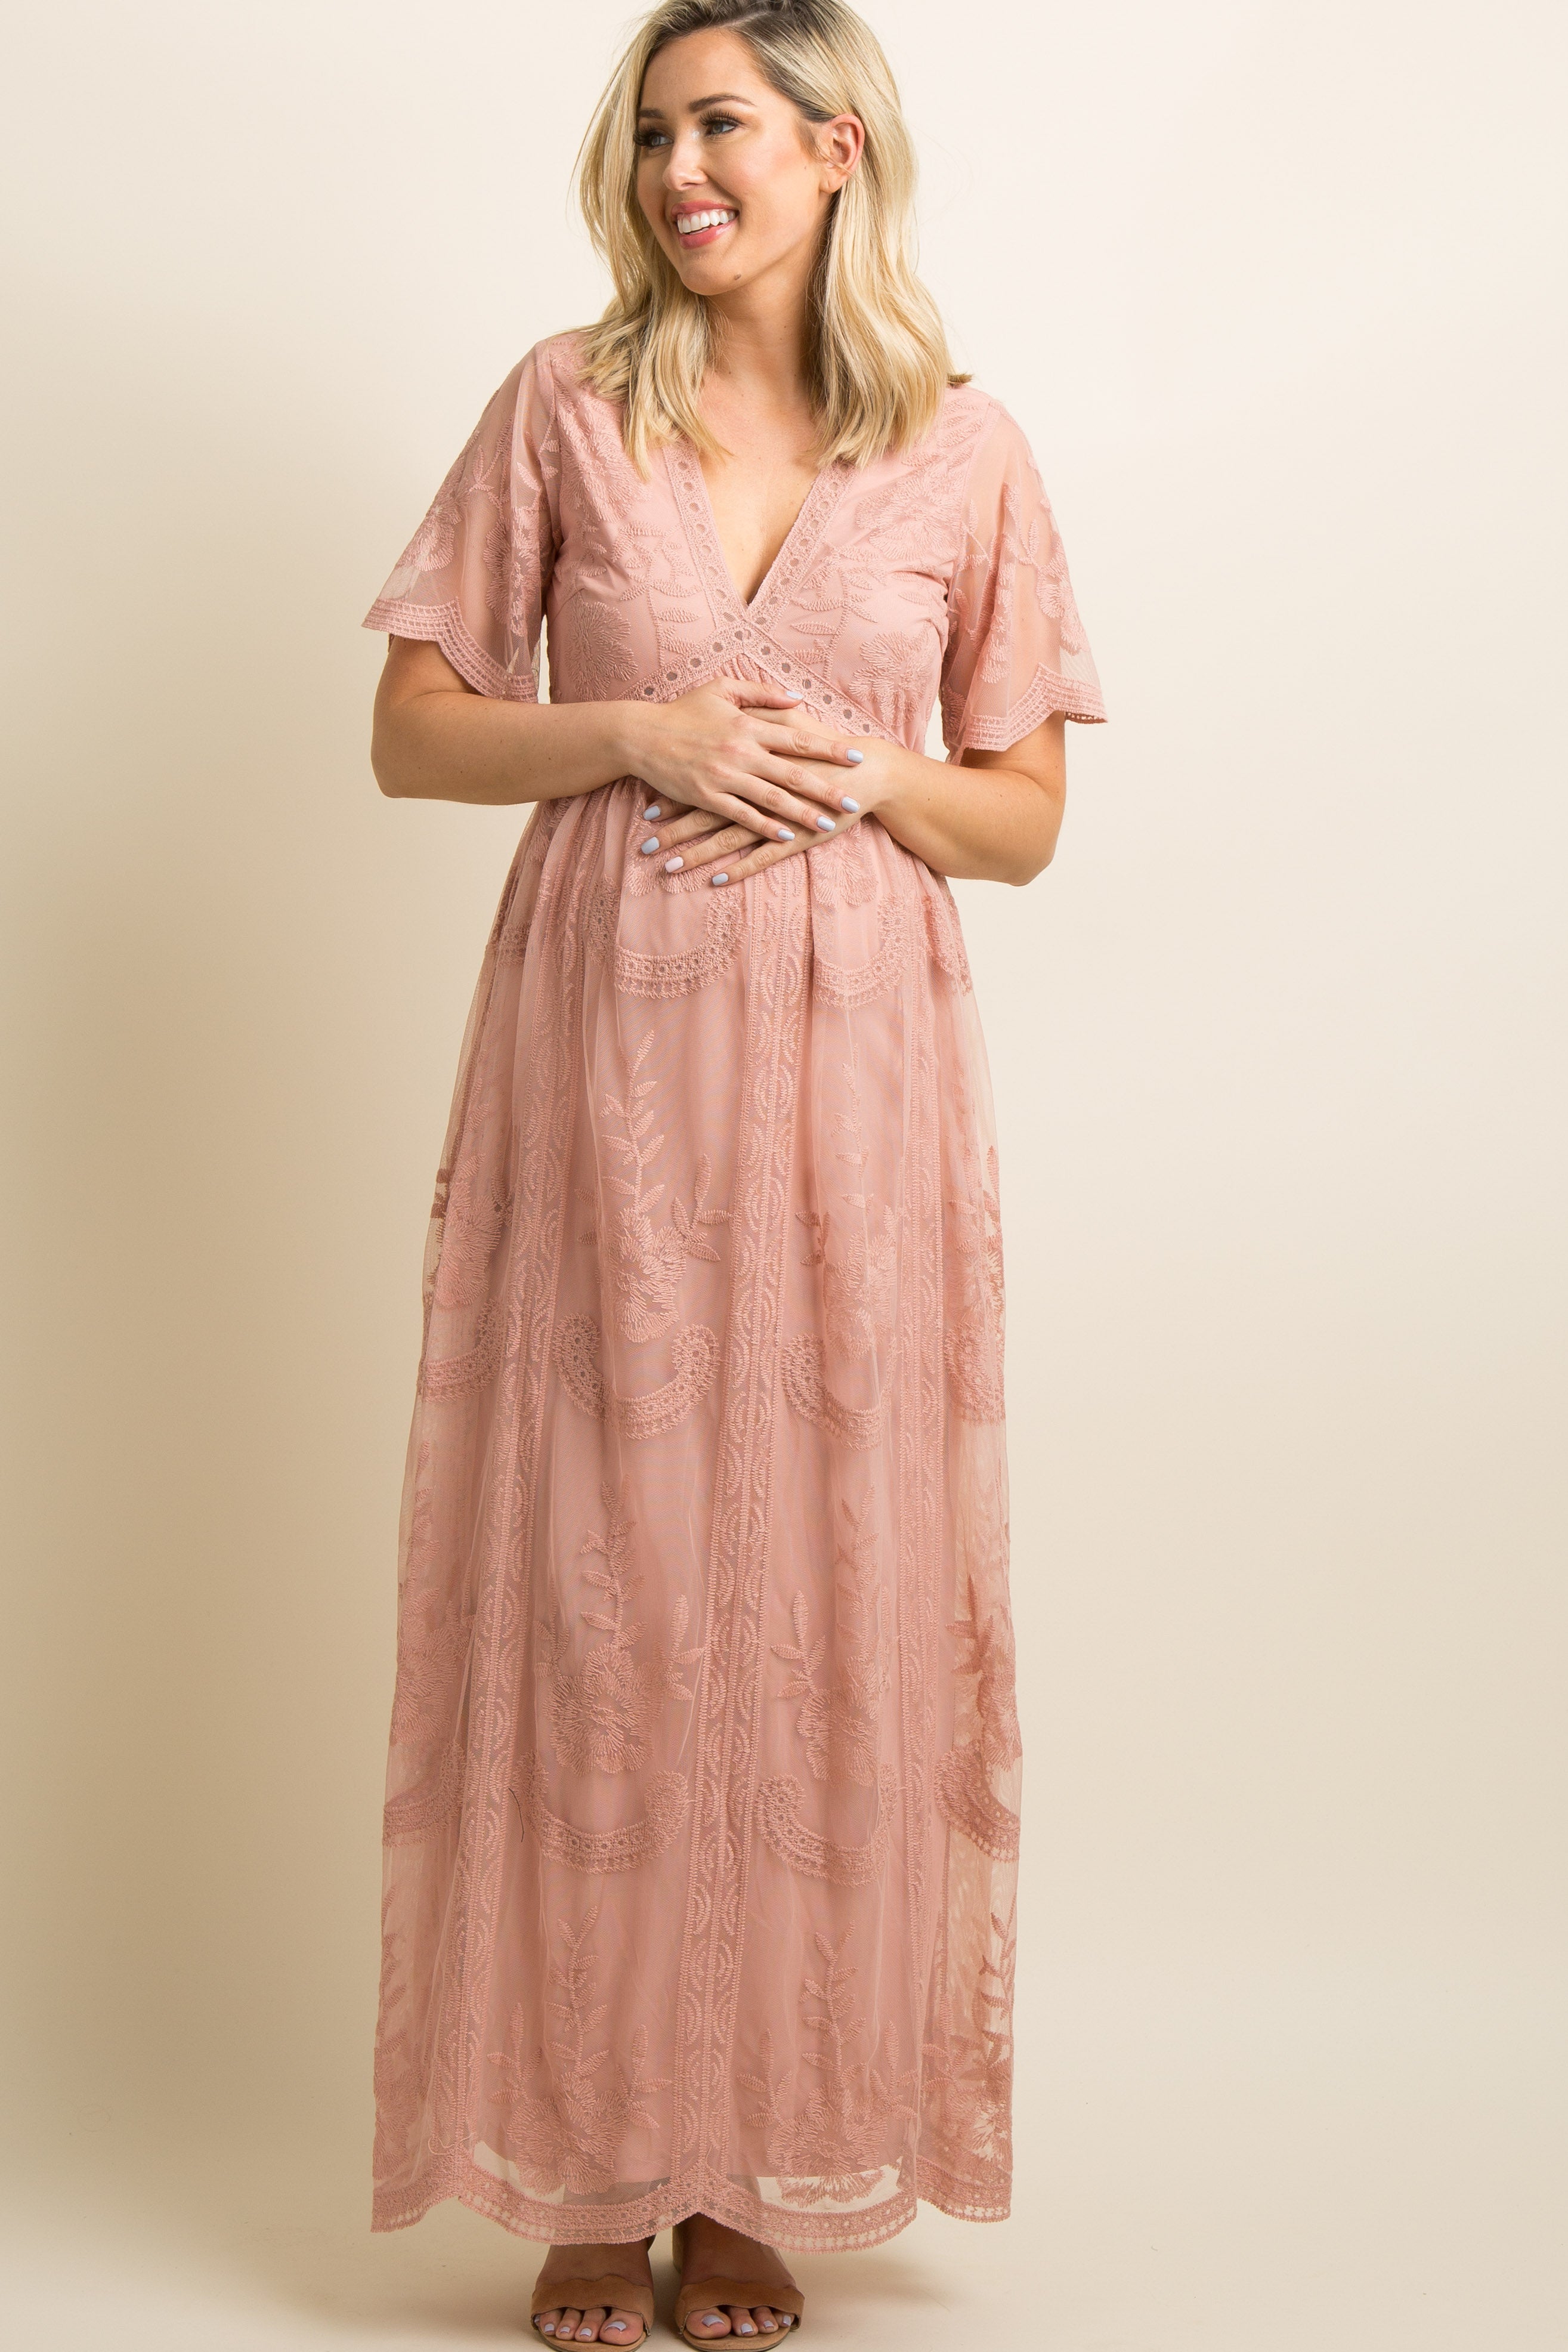 MORPH maternity Women A-line Pink Dress - Buy MORPH maternity